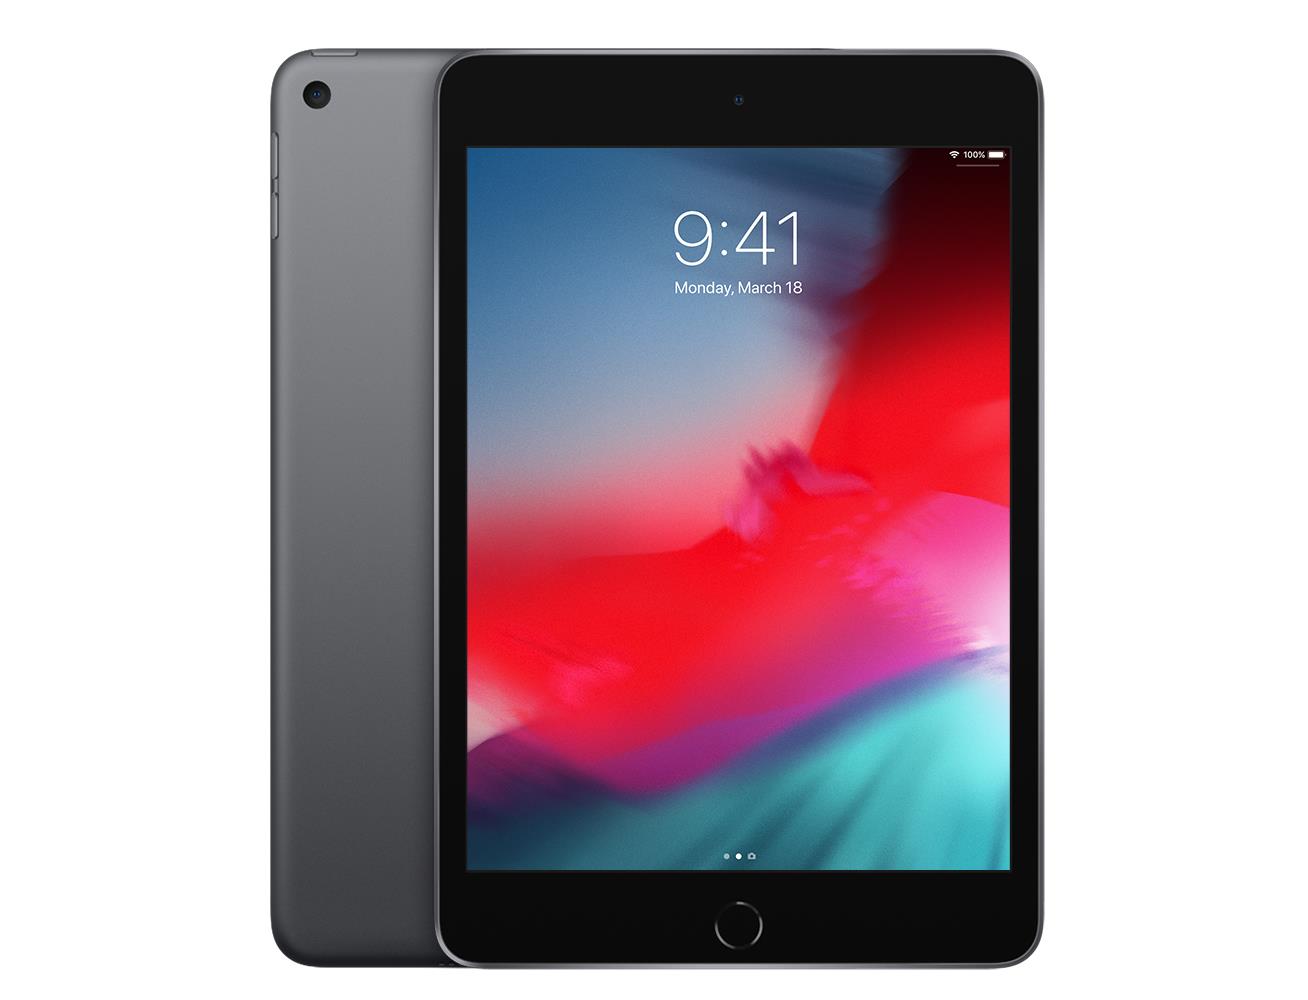 Apple iPad Mini 5, 7.9 Inch 64GB Wi-Fi (2019 Model) - Space Grey| Blink